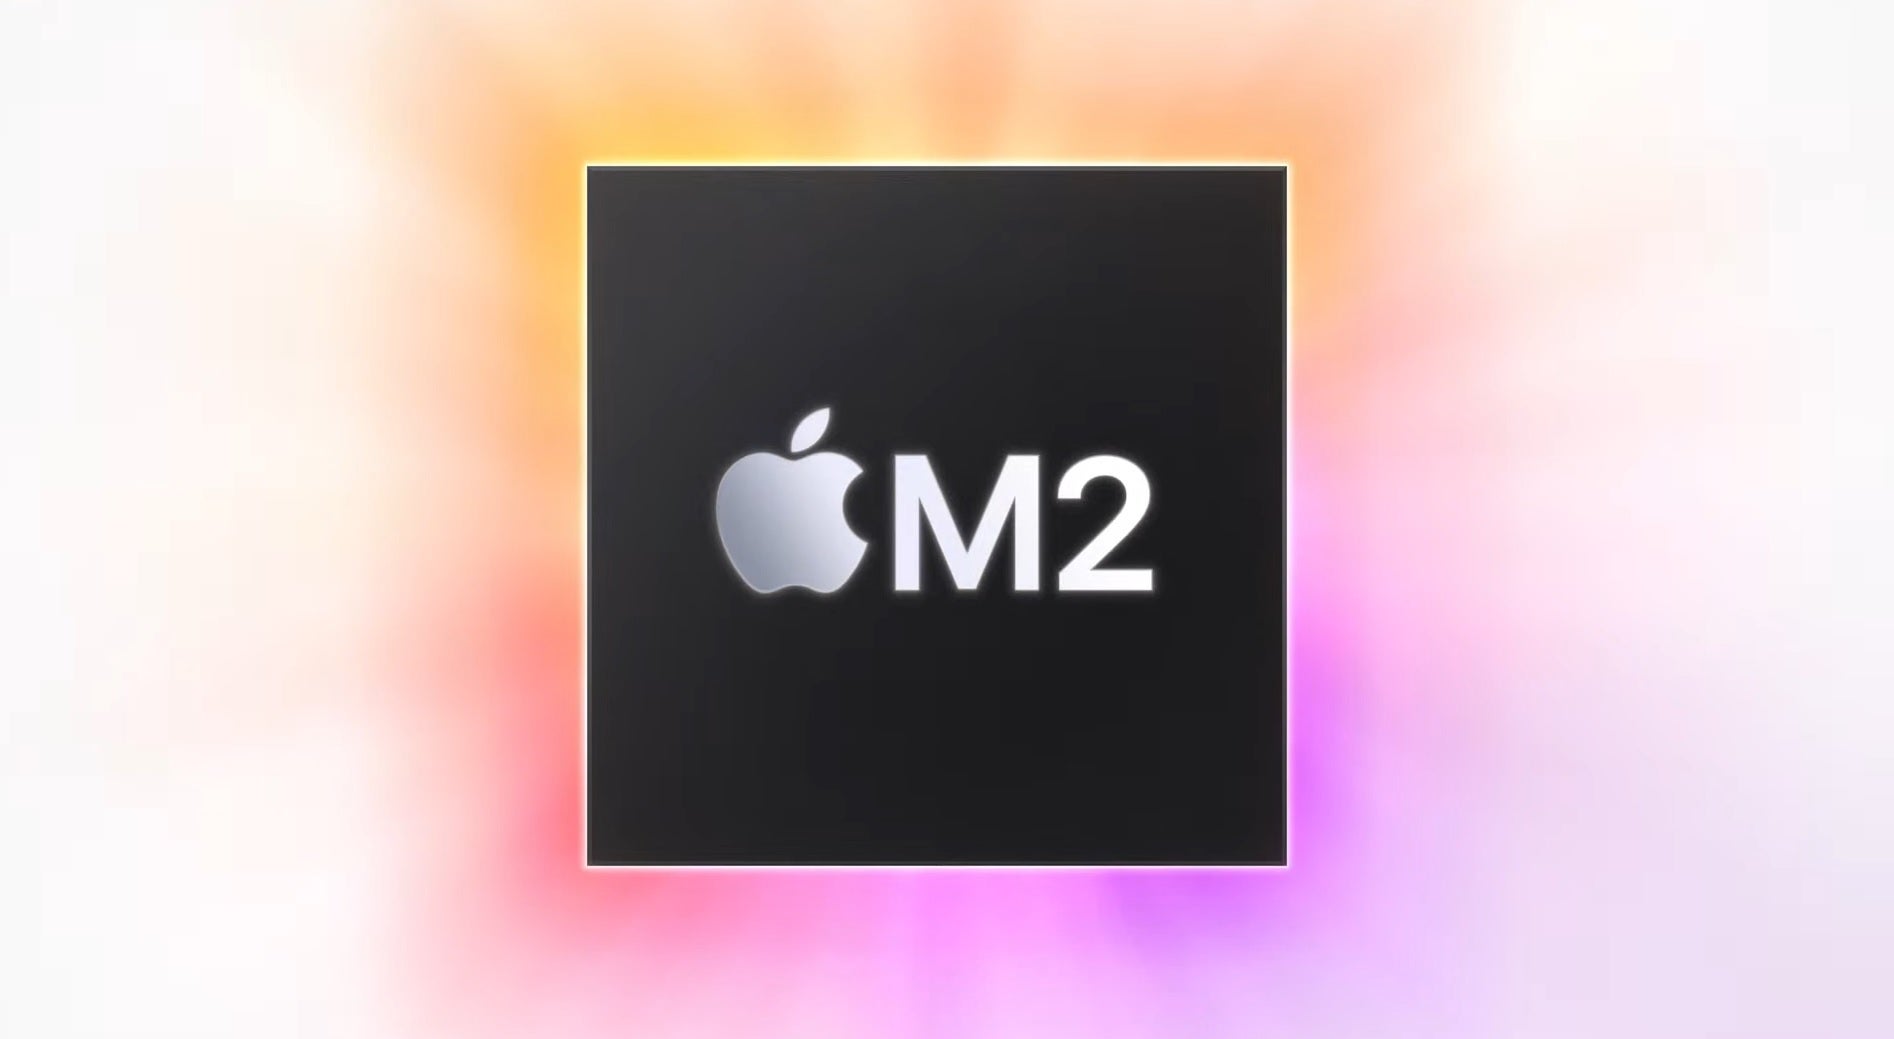 Apple Stock News: M2 Chip